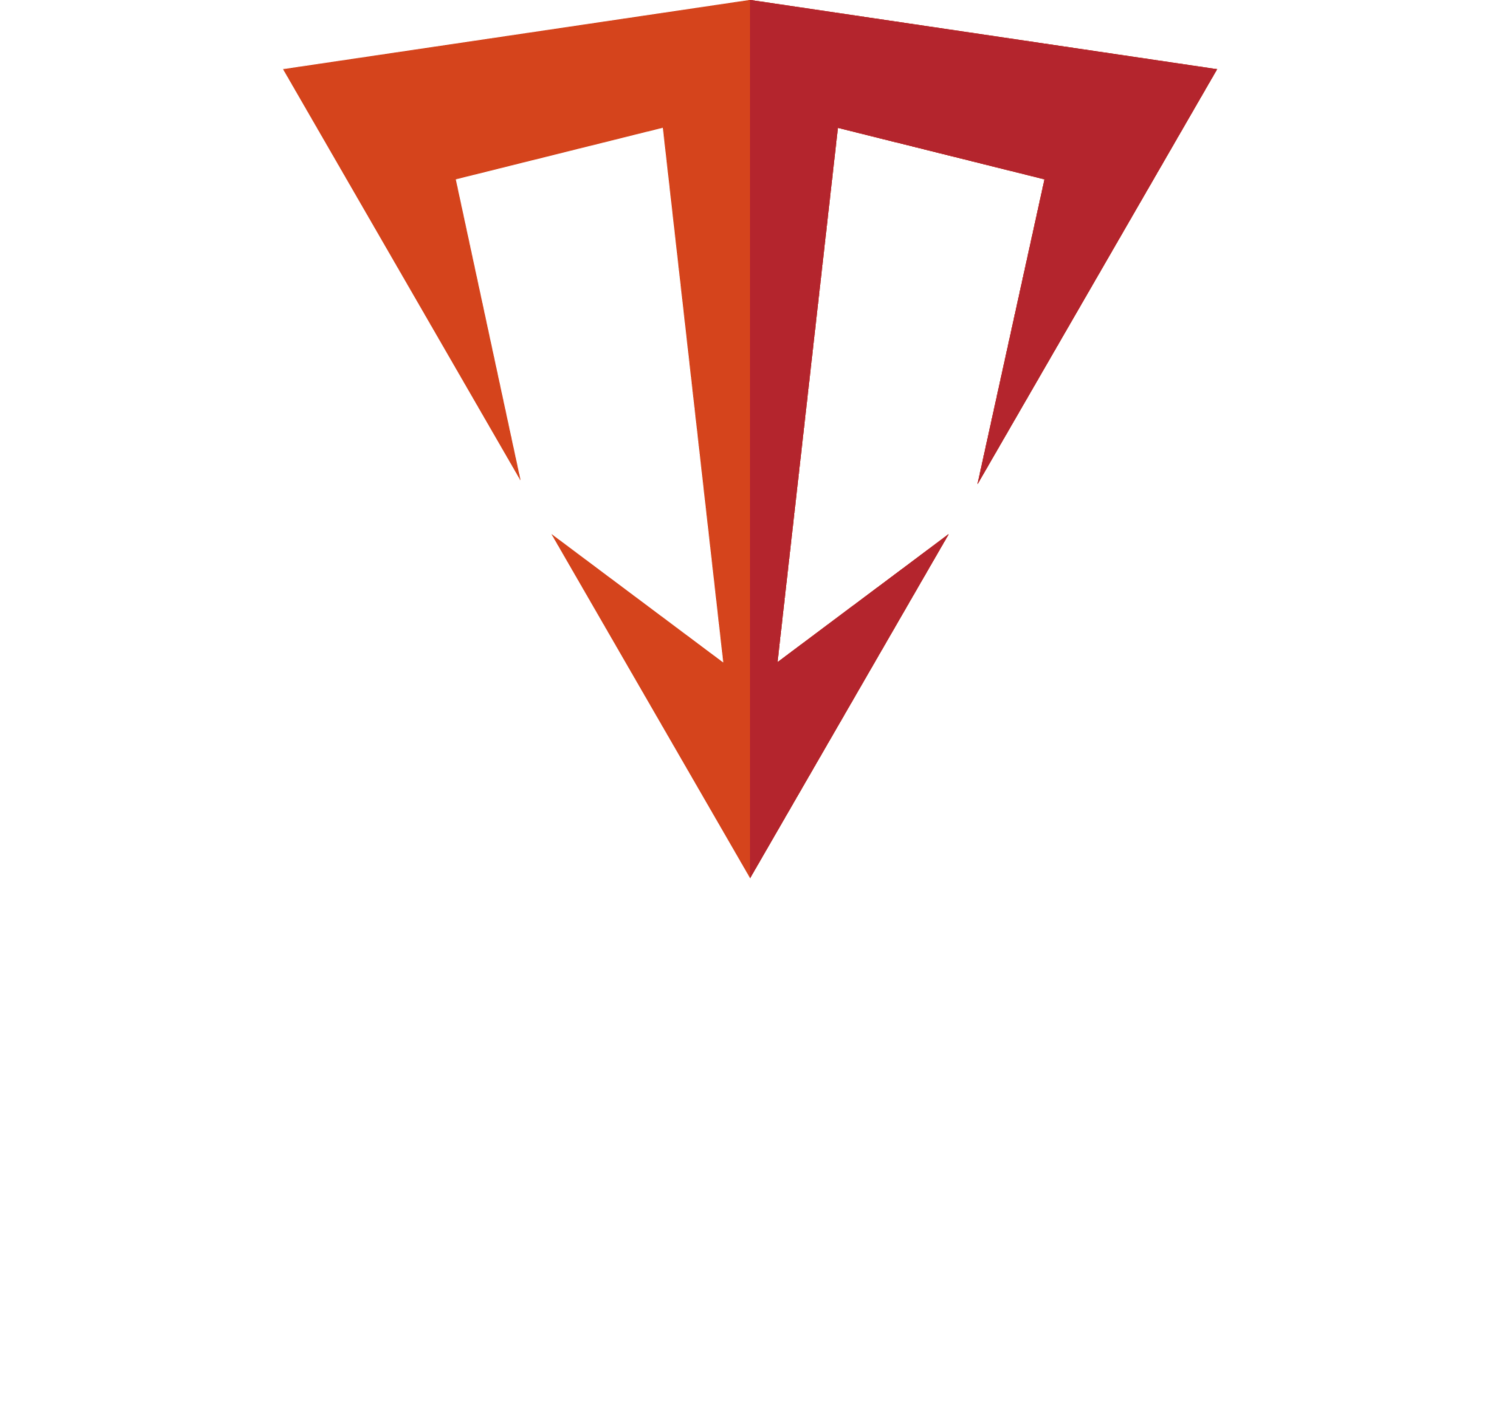 Triton Triangle Logo - Triton Innovation Inc